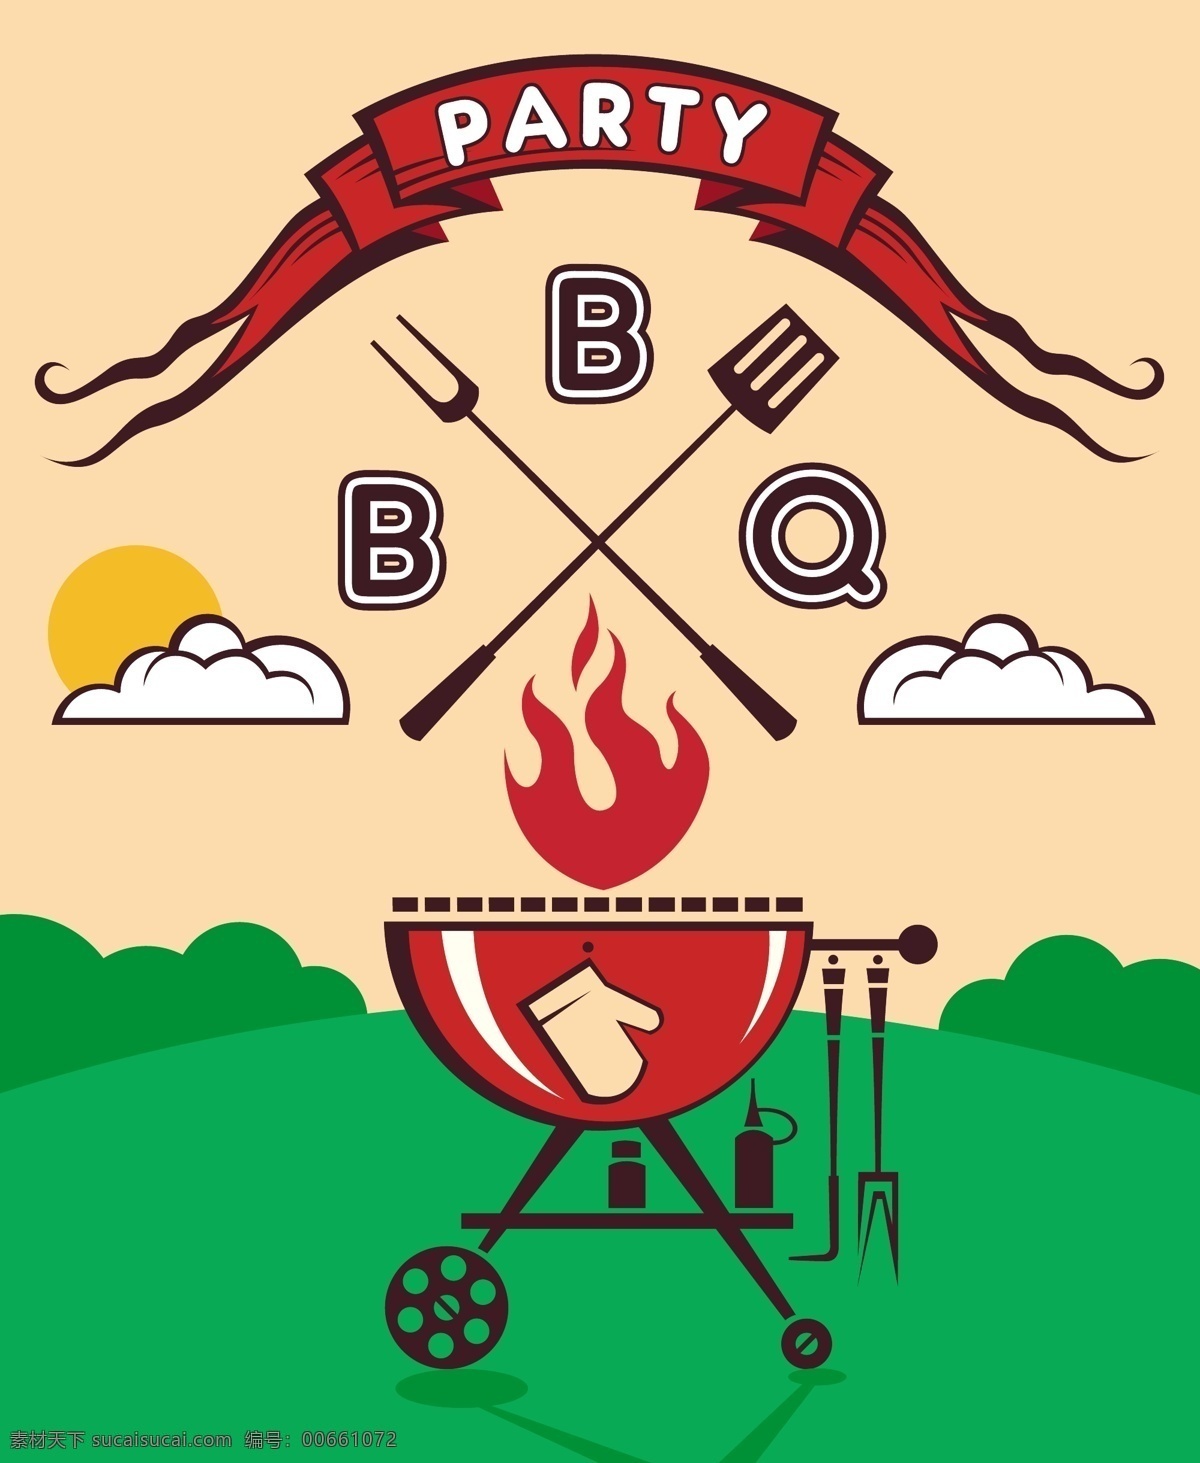 bbq 创意 烧烤 派对 邀请函 矢量 矢量素材 设计素材 背景素材